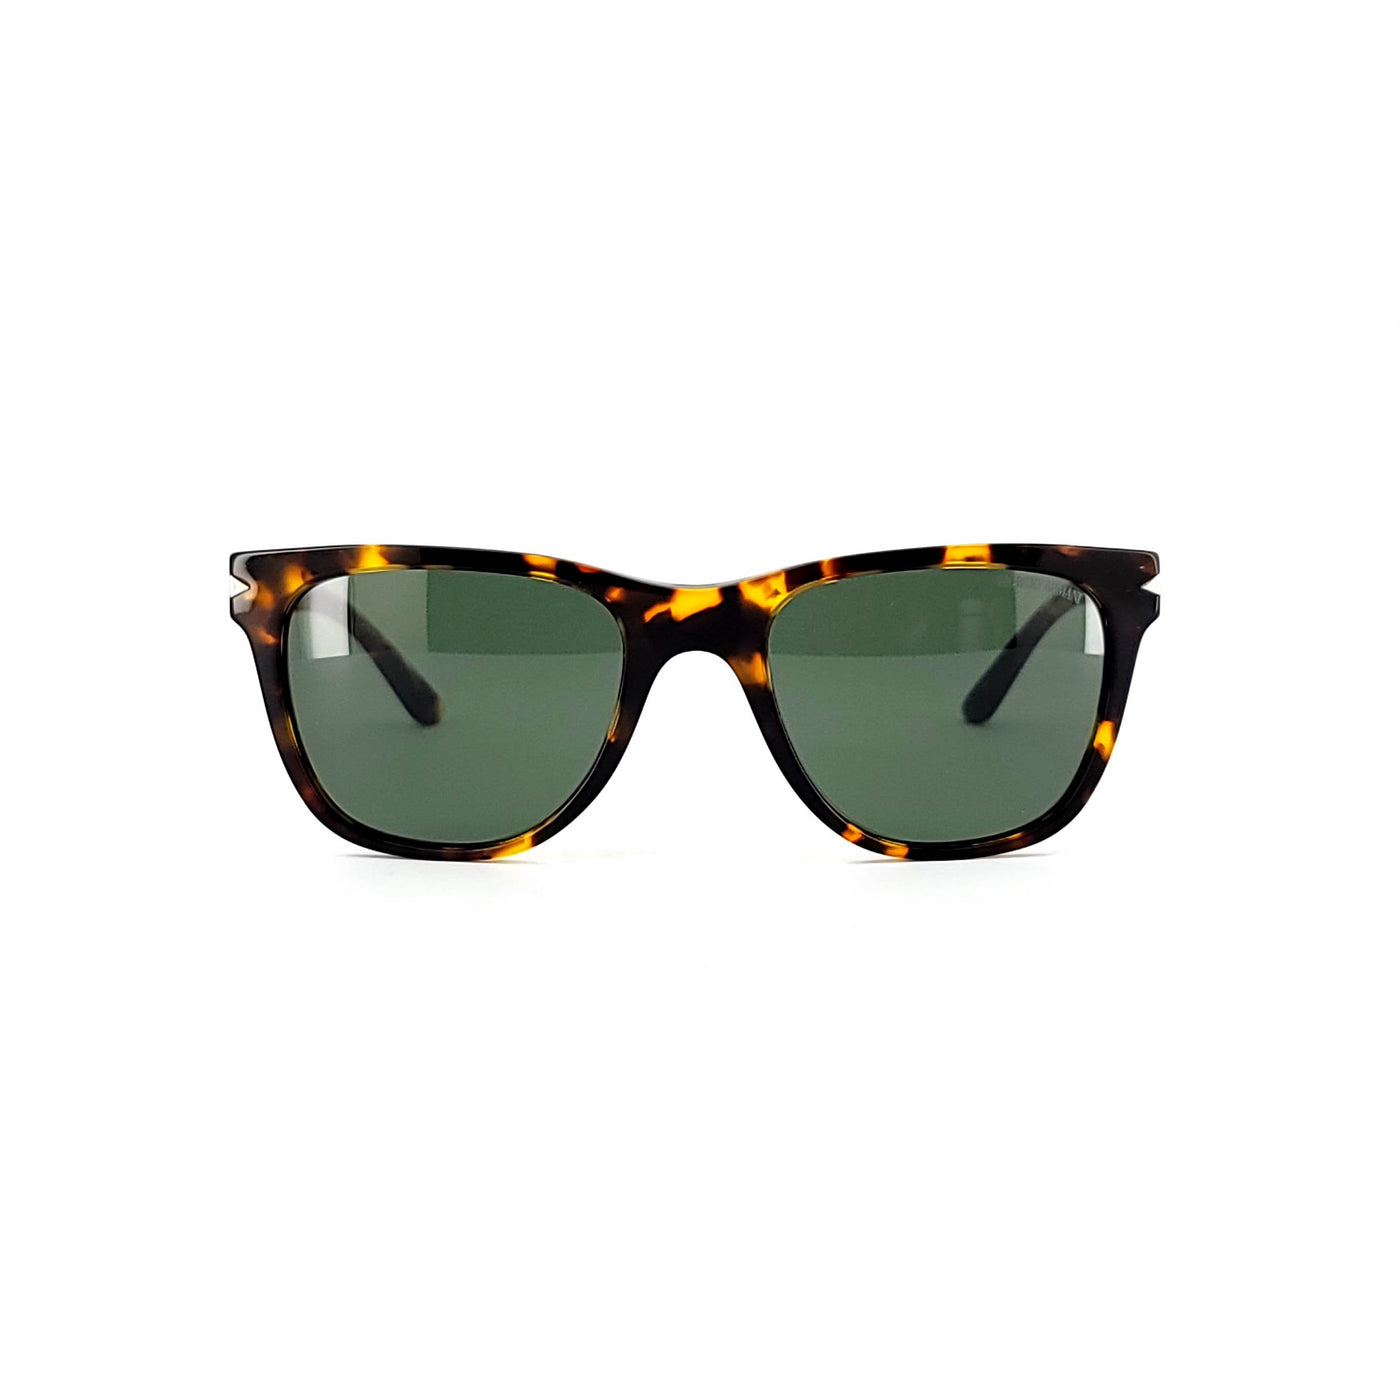 Giorgio Armani AR8133/5092/73 | Sunglasses - Vision Express Optical Philippines